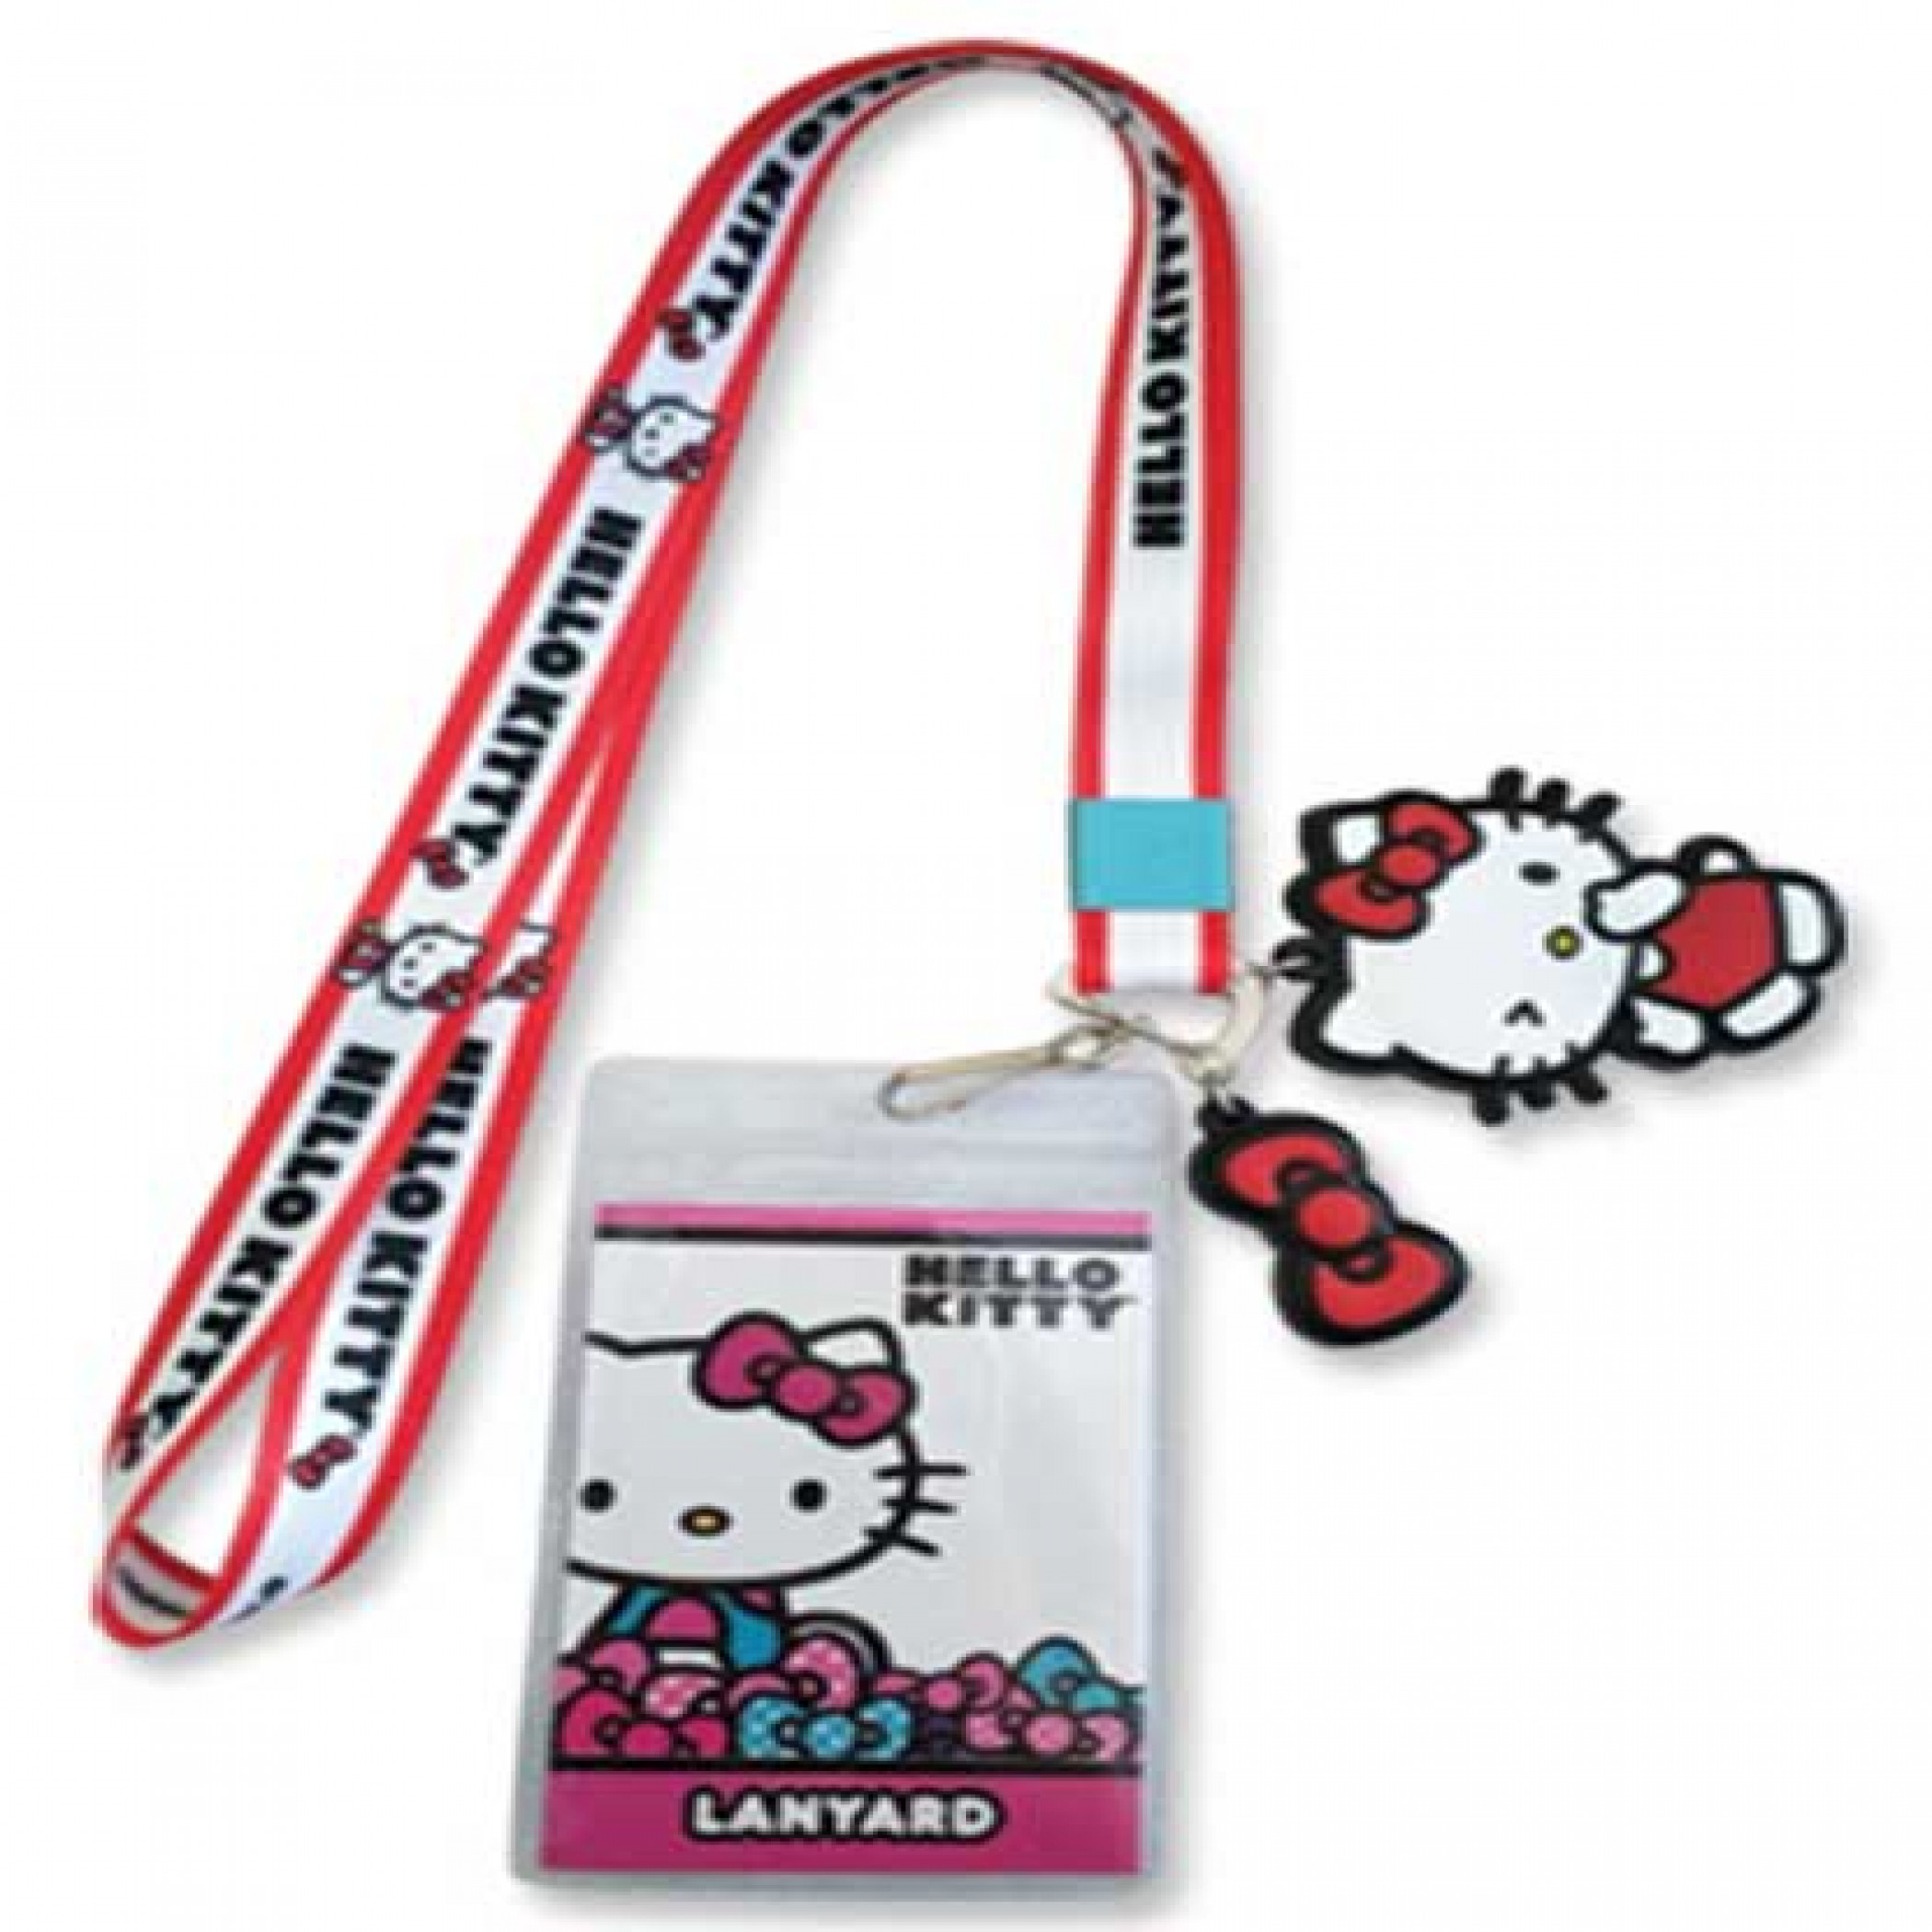 Hello Kitty ID Badge and Charm Lanyard